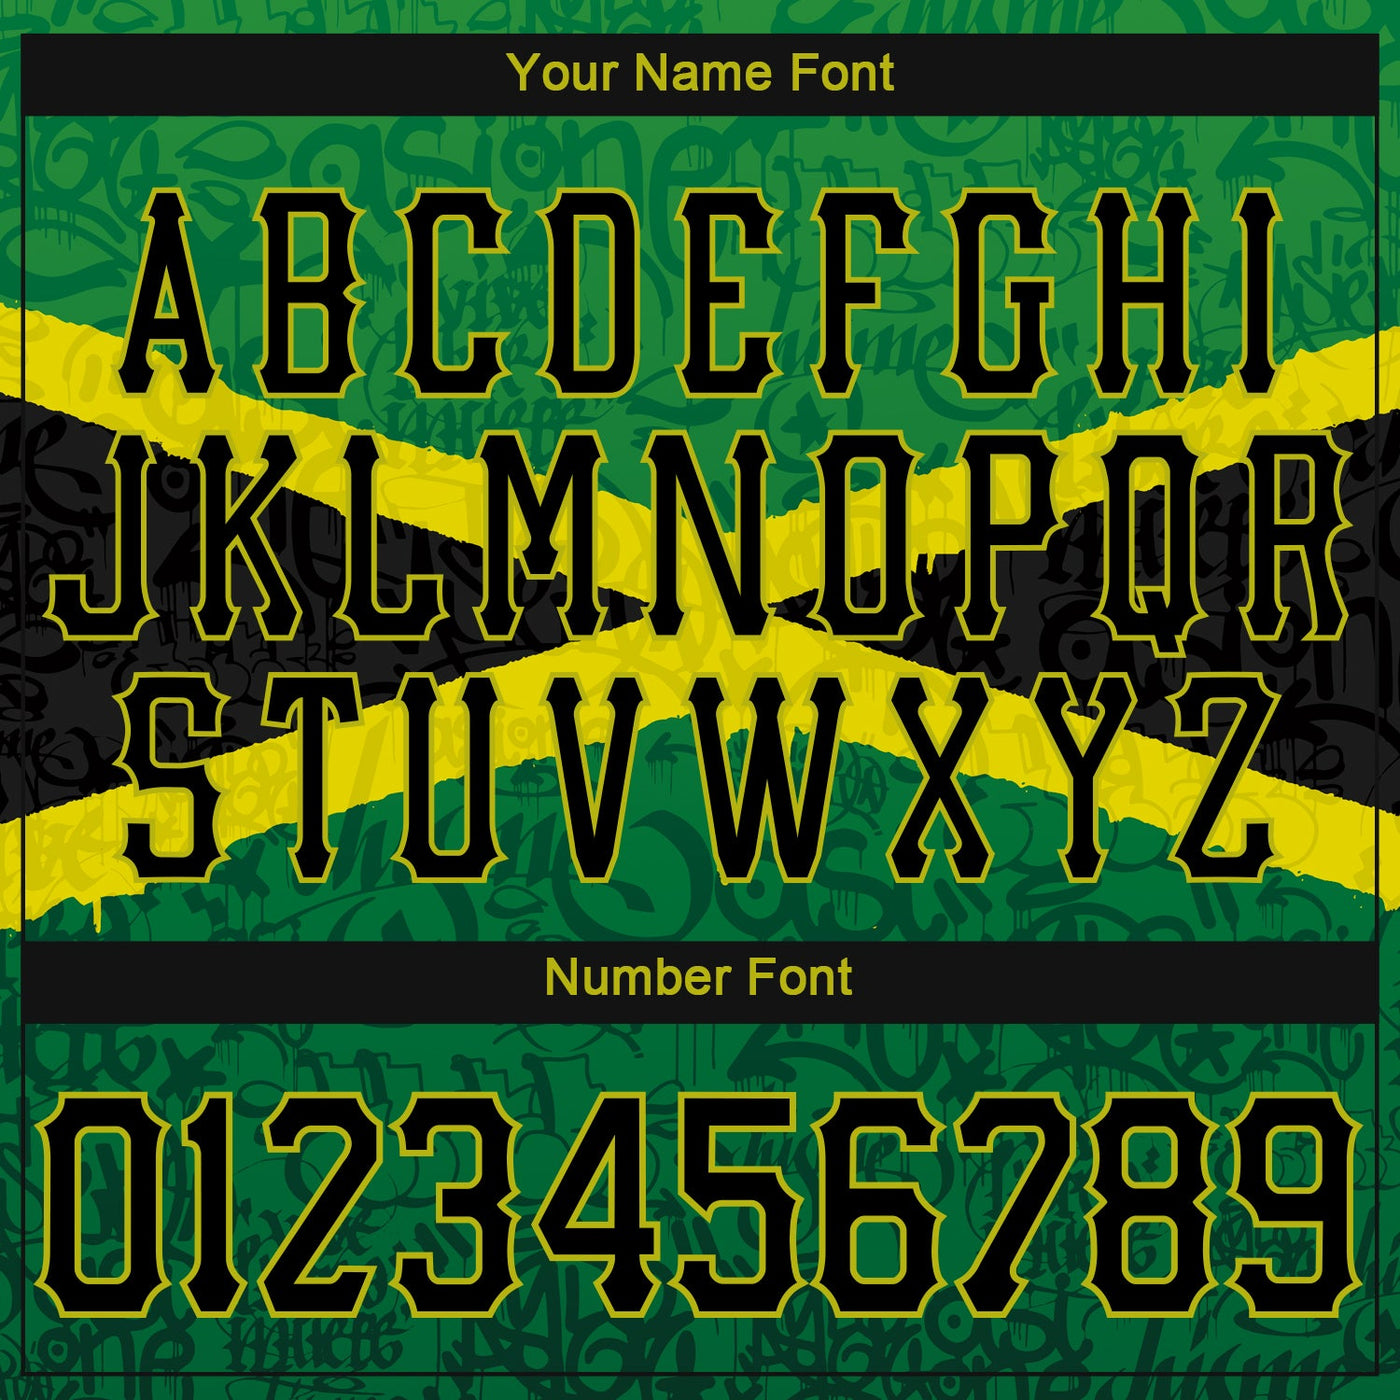 Custom Graffiti Pattern Black-Green 3D Jamaica Authentic Baseball Jersey - Owls Matrix LTD